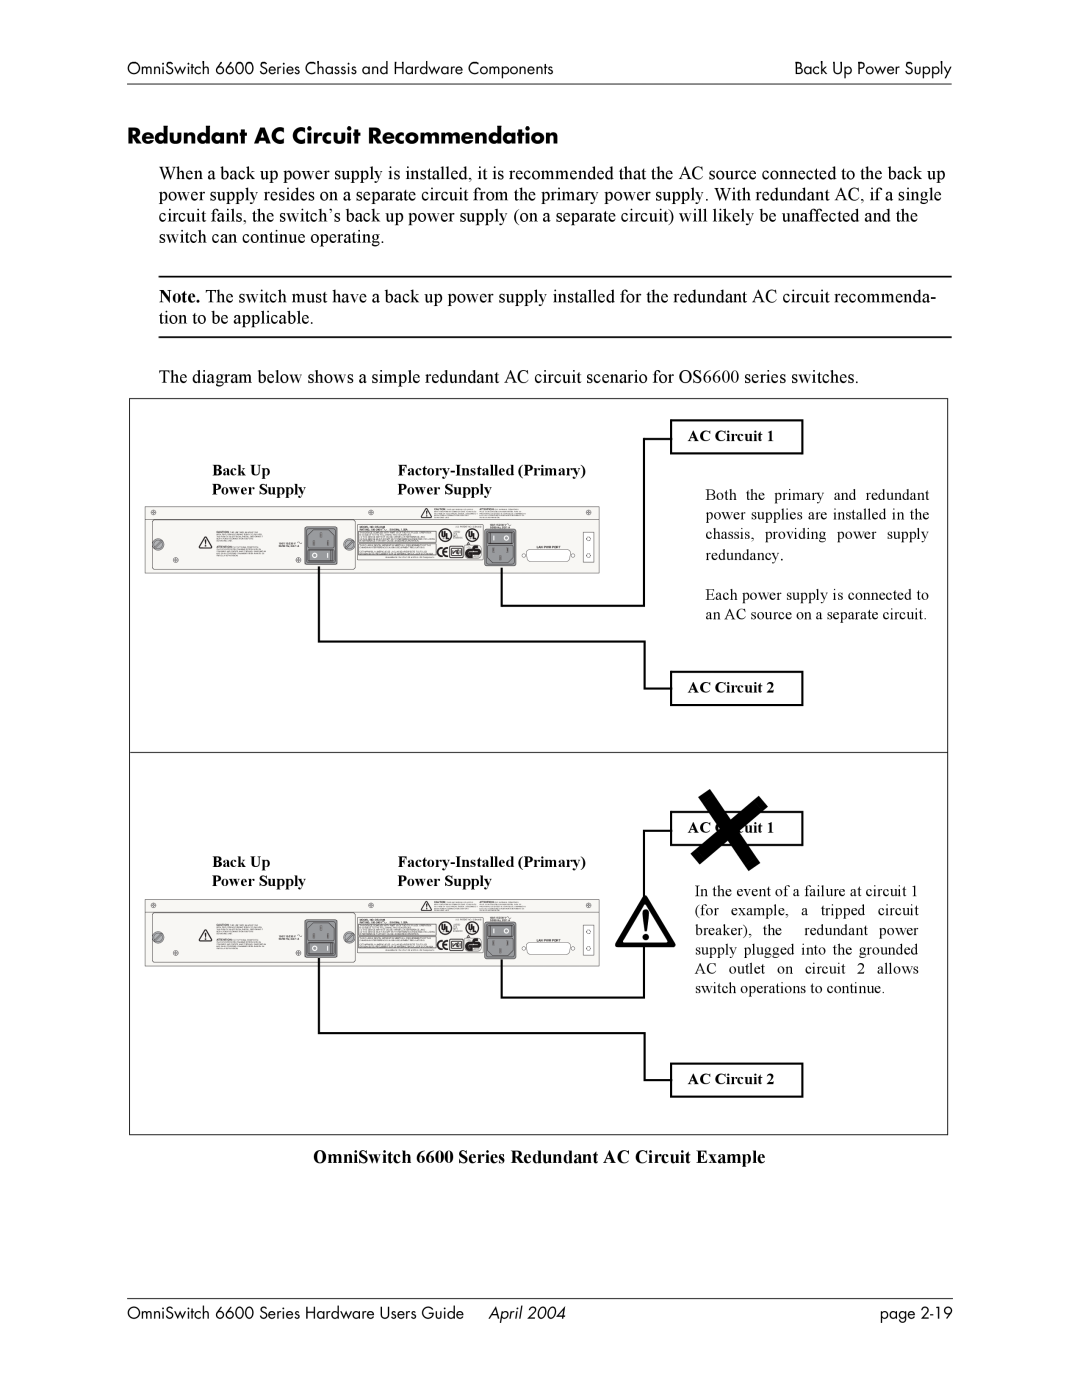 Alcatel-Lucent 6648, 6624 manual Redundant AC Circuit Recommendation, OmniSwitch 6600 Series Redundant AC Circuit Example 